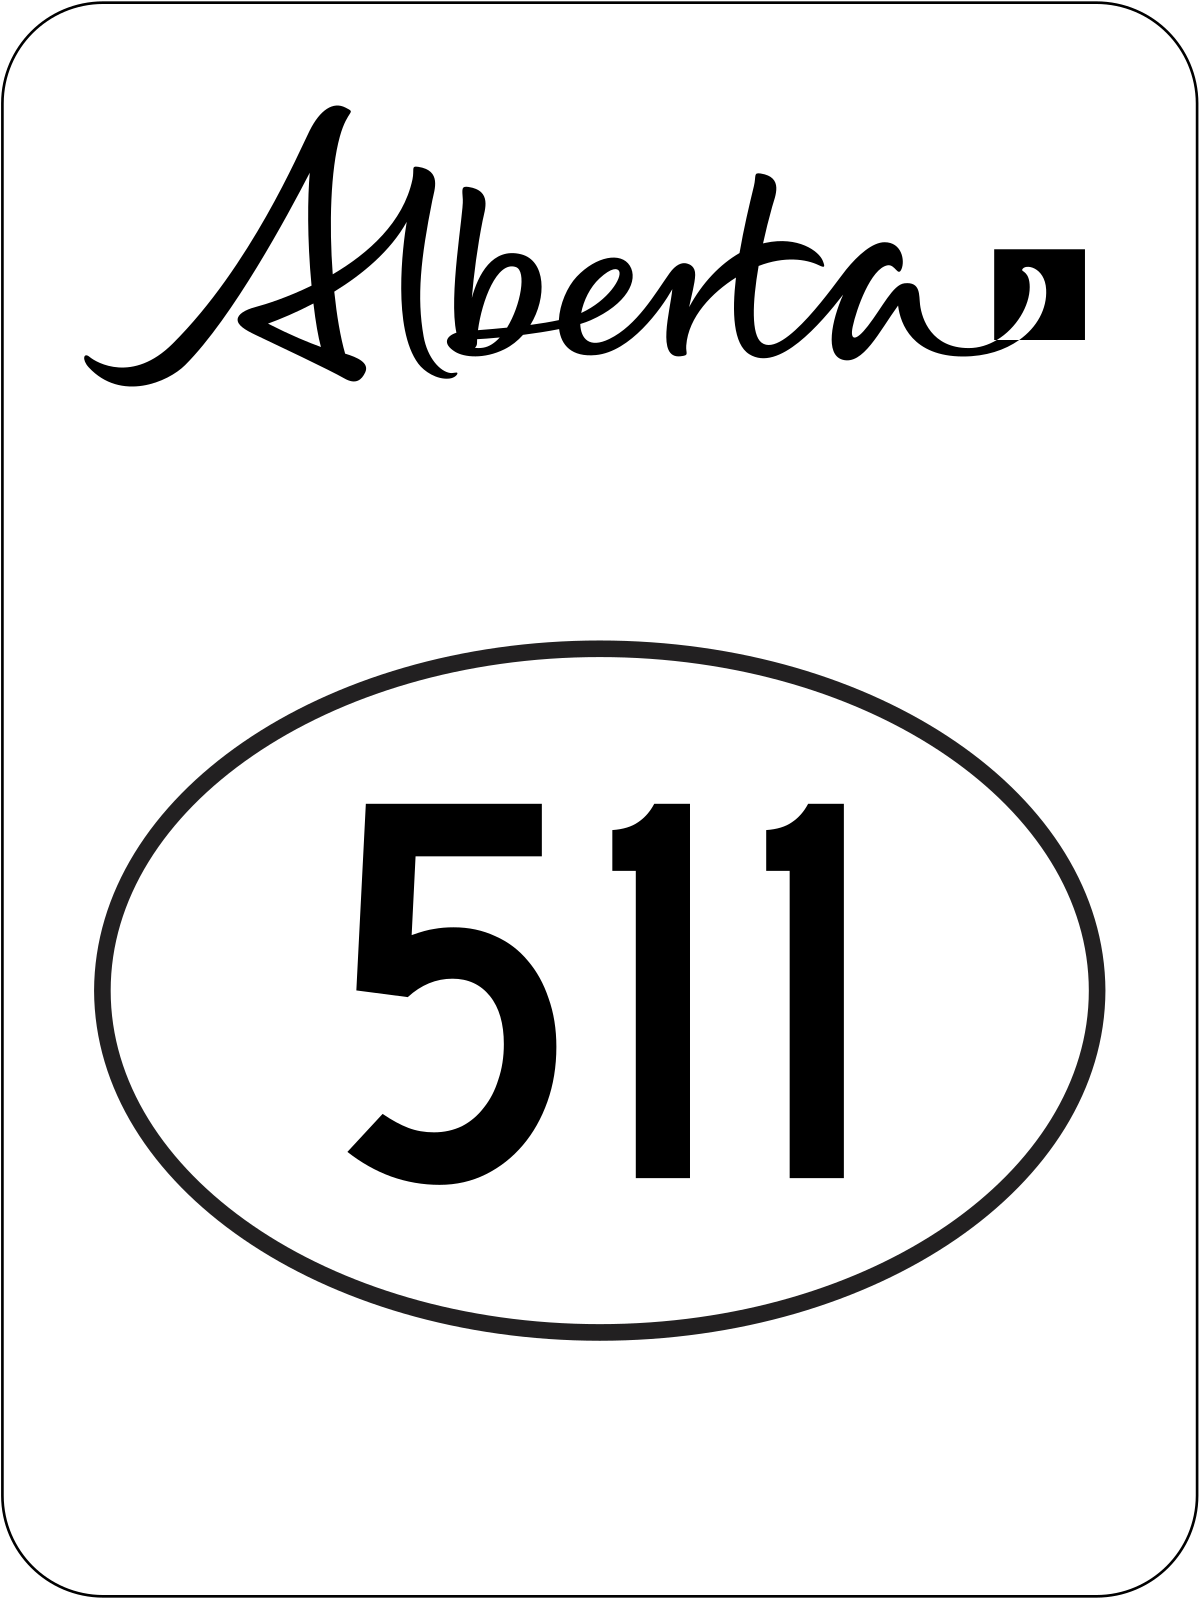 Alberta 511 logo